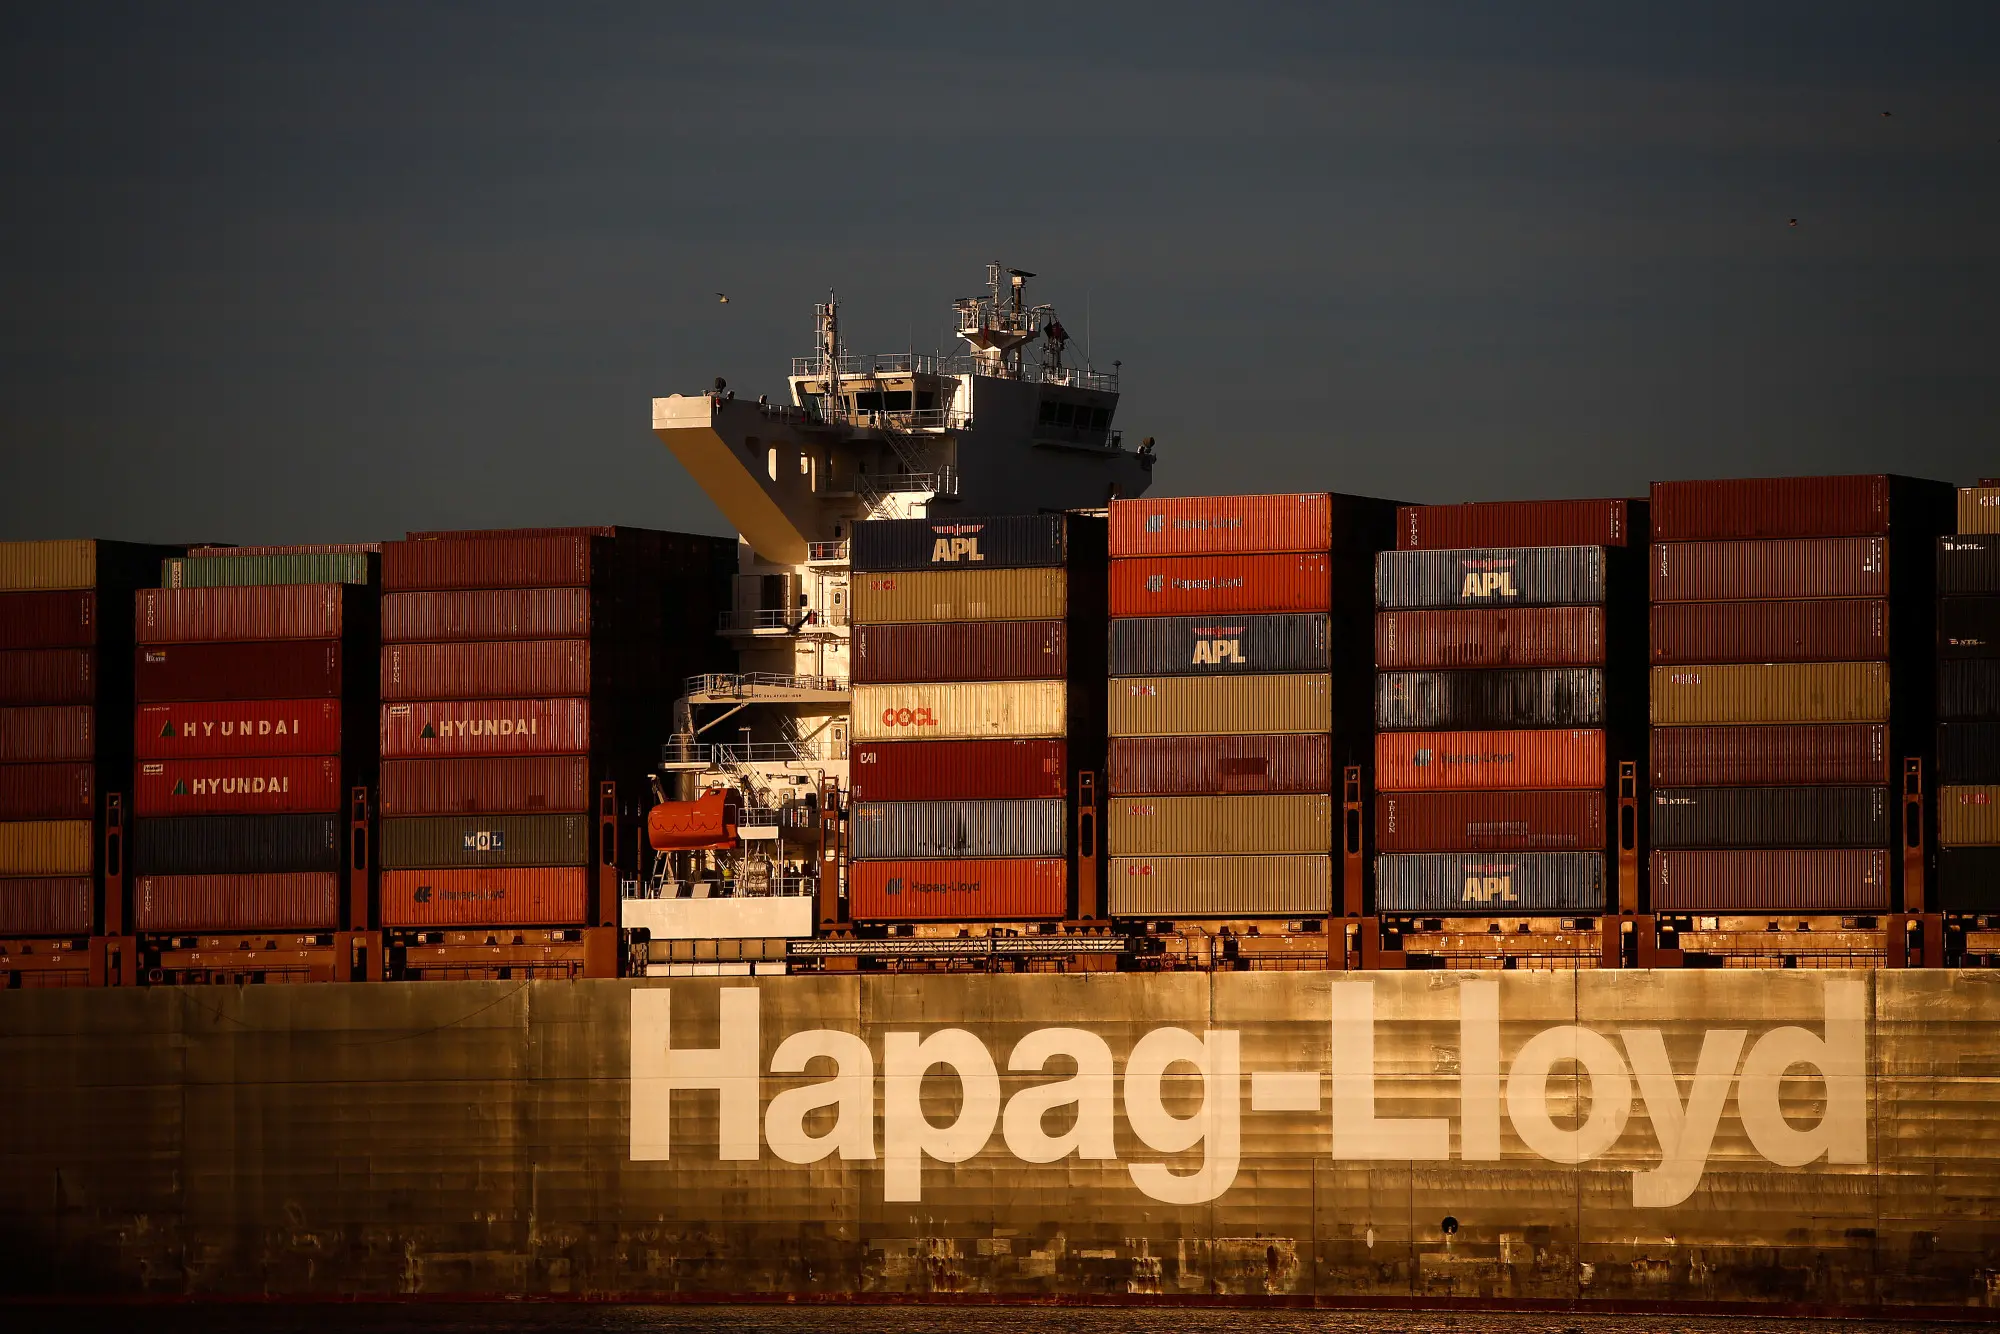 Hapag-Lloyd Profit Warning Drags Down Shipping Sector Stocks